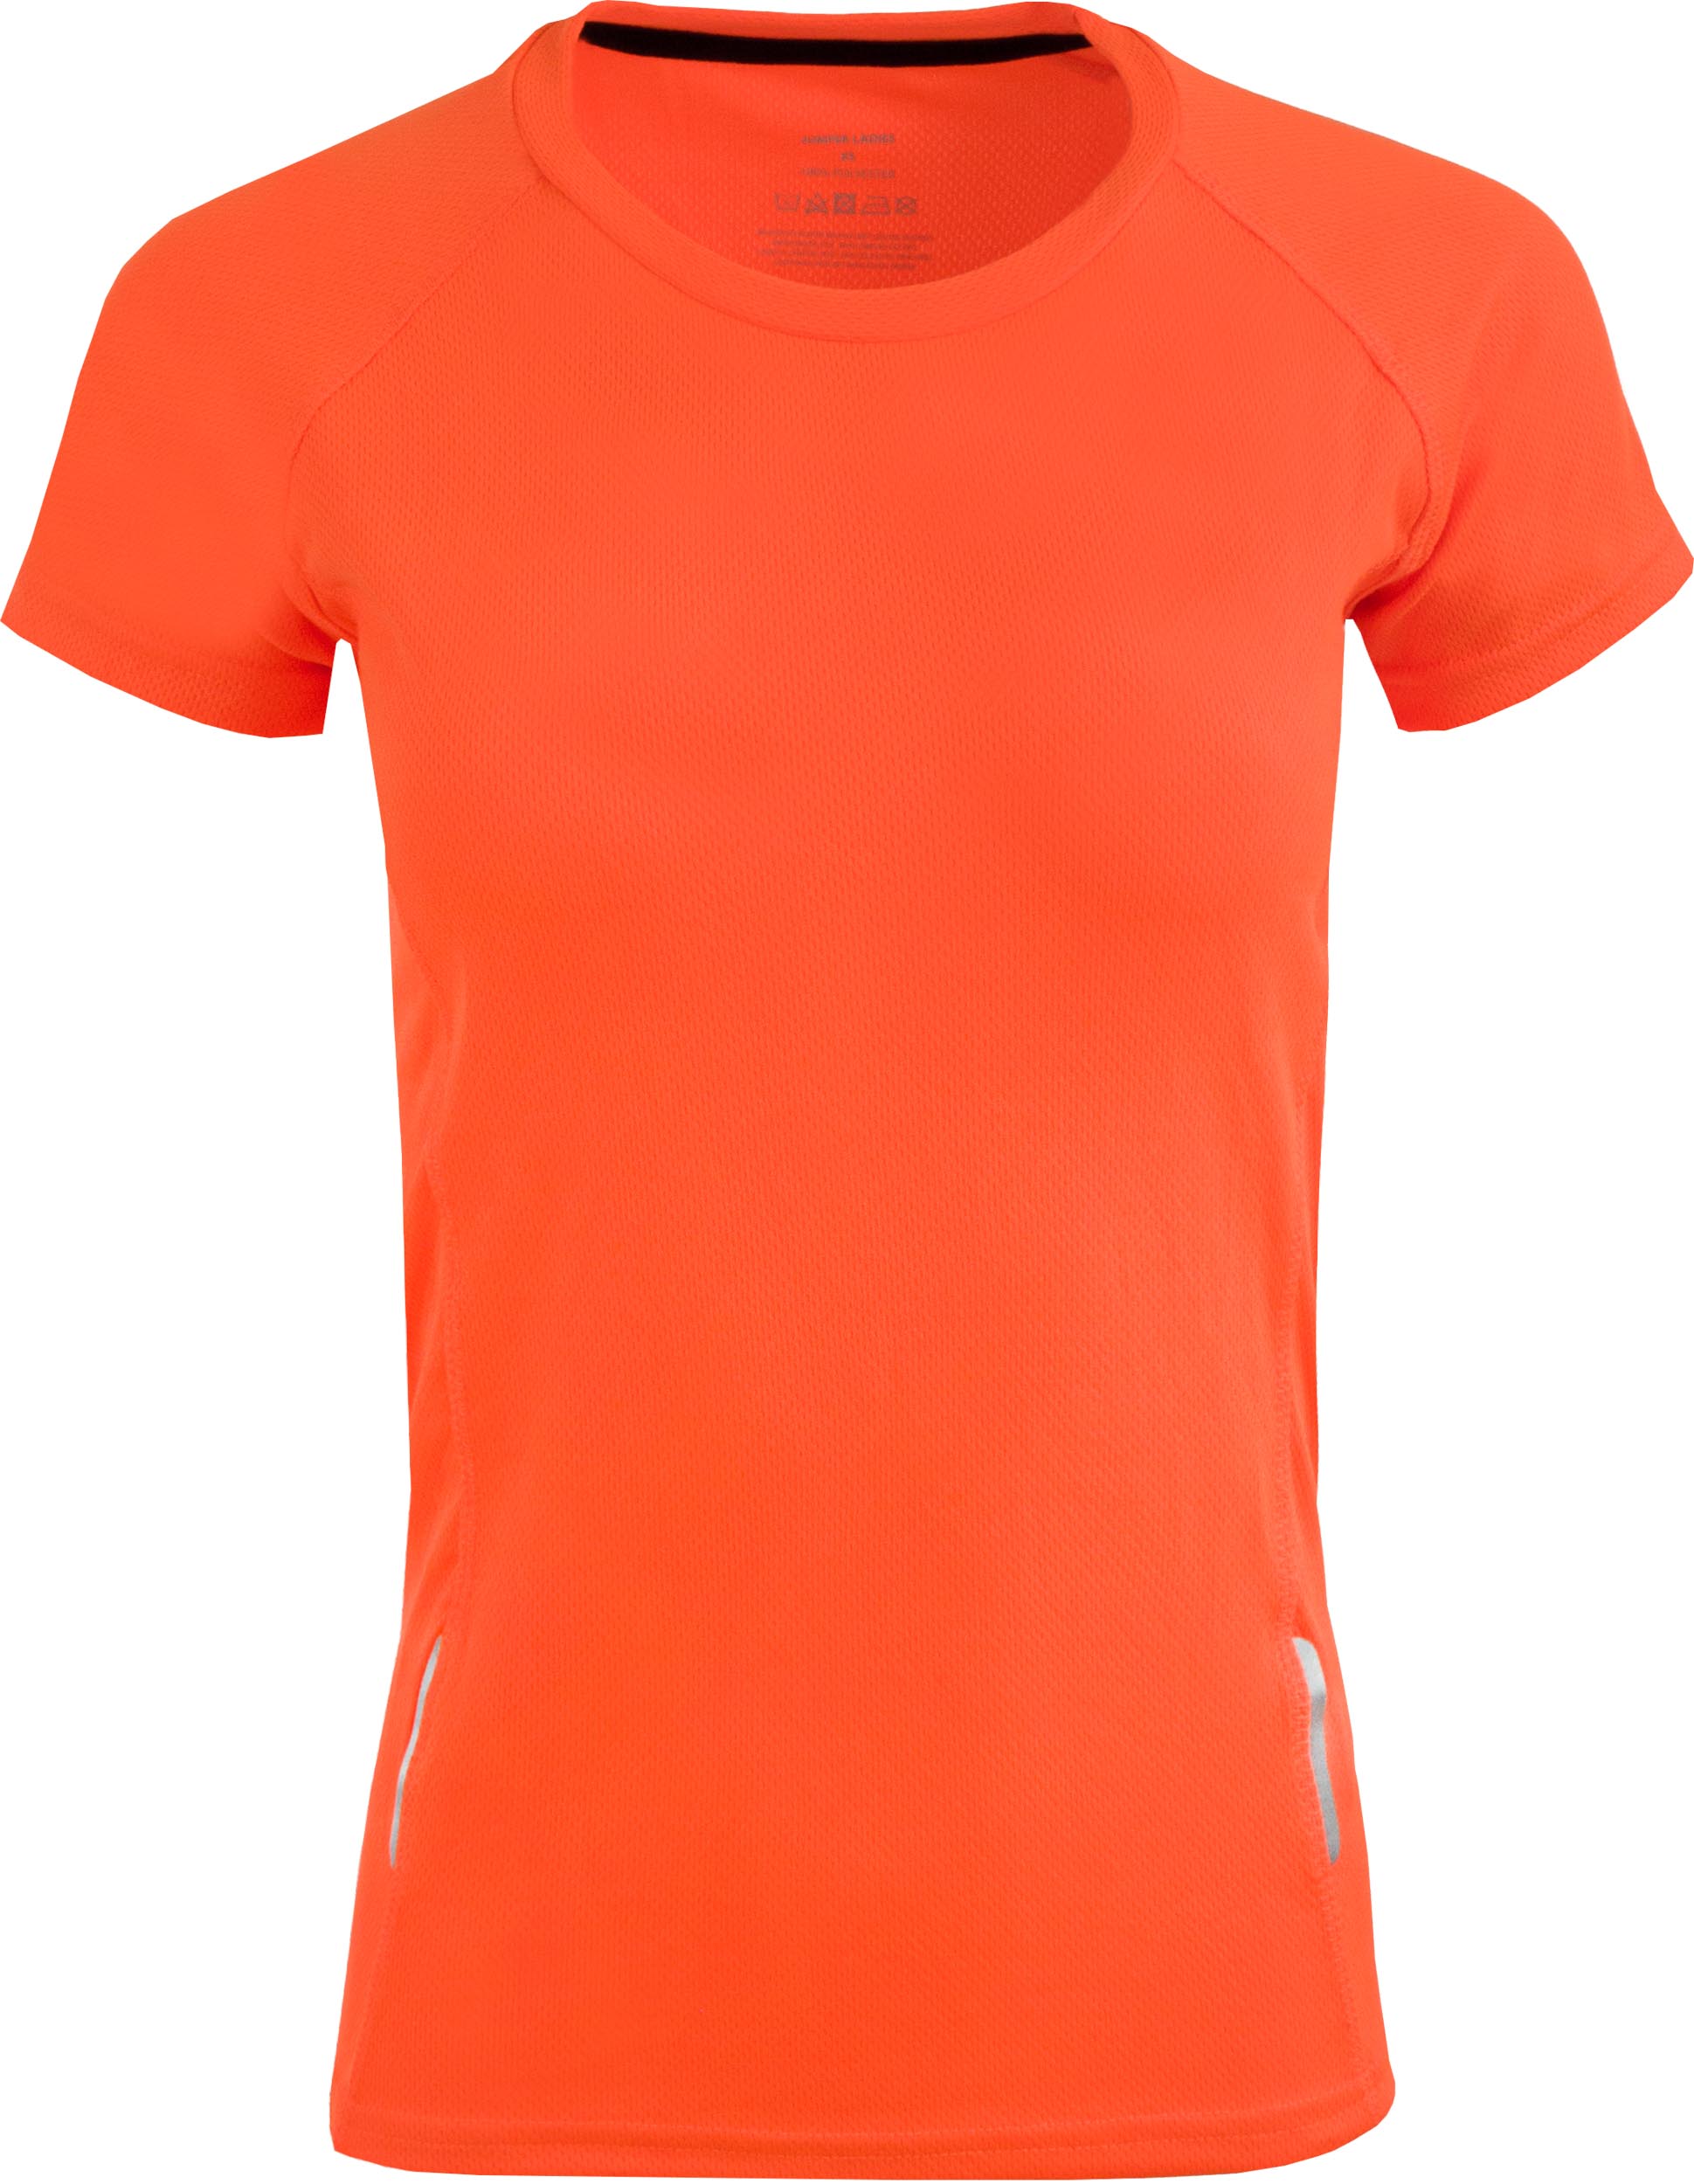 Sportovní triko JUMPER Ladies orange|XS